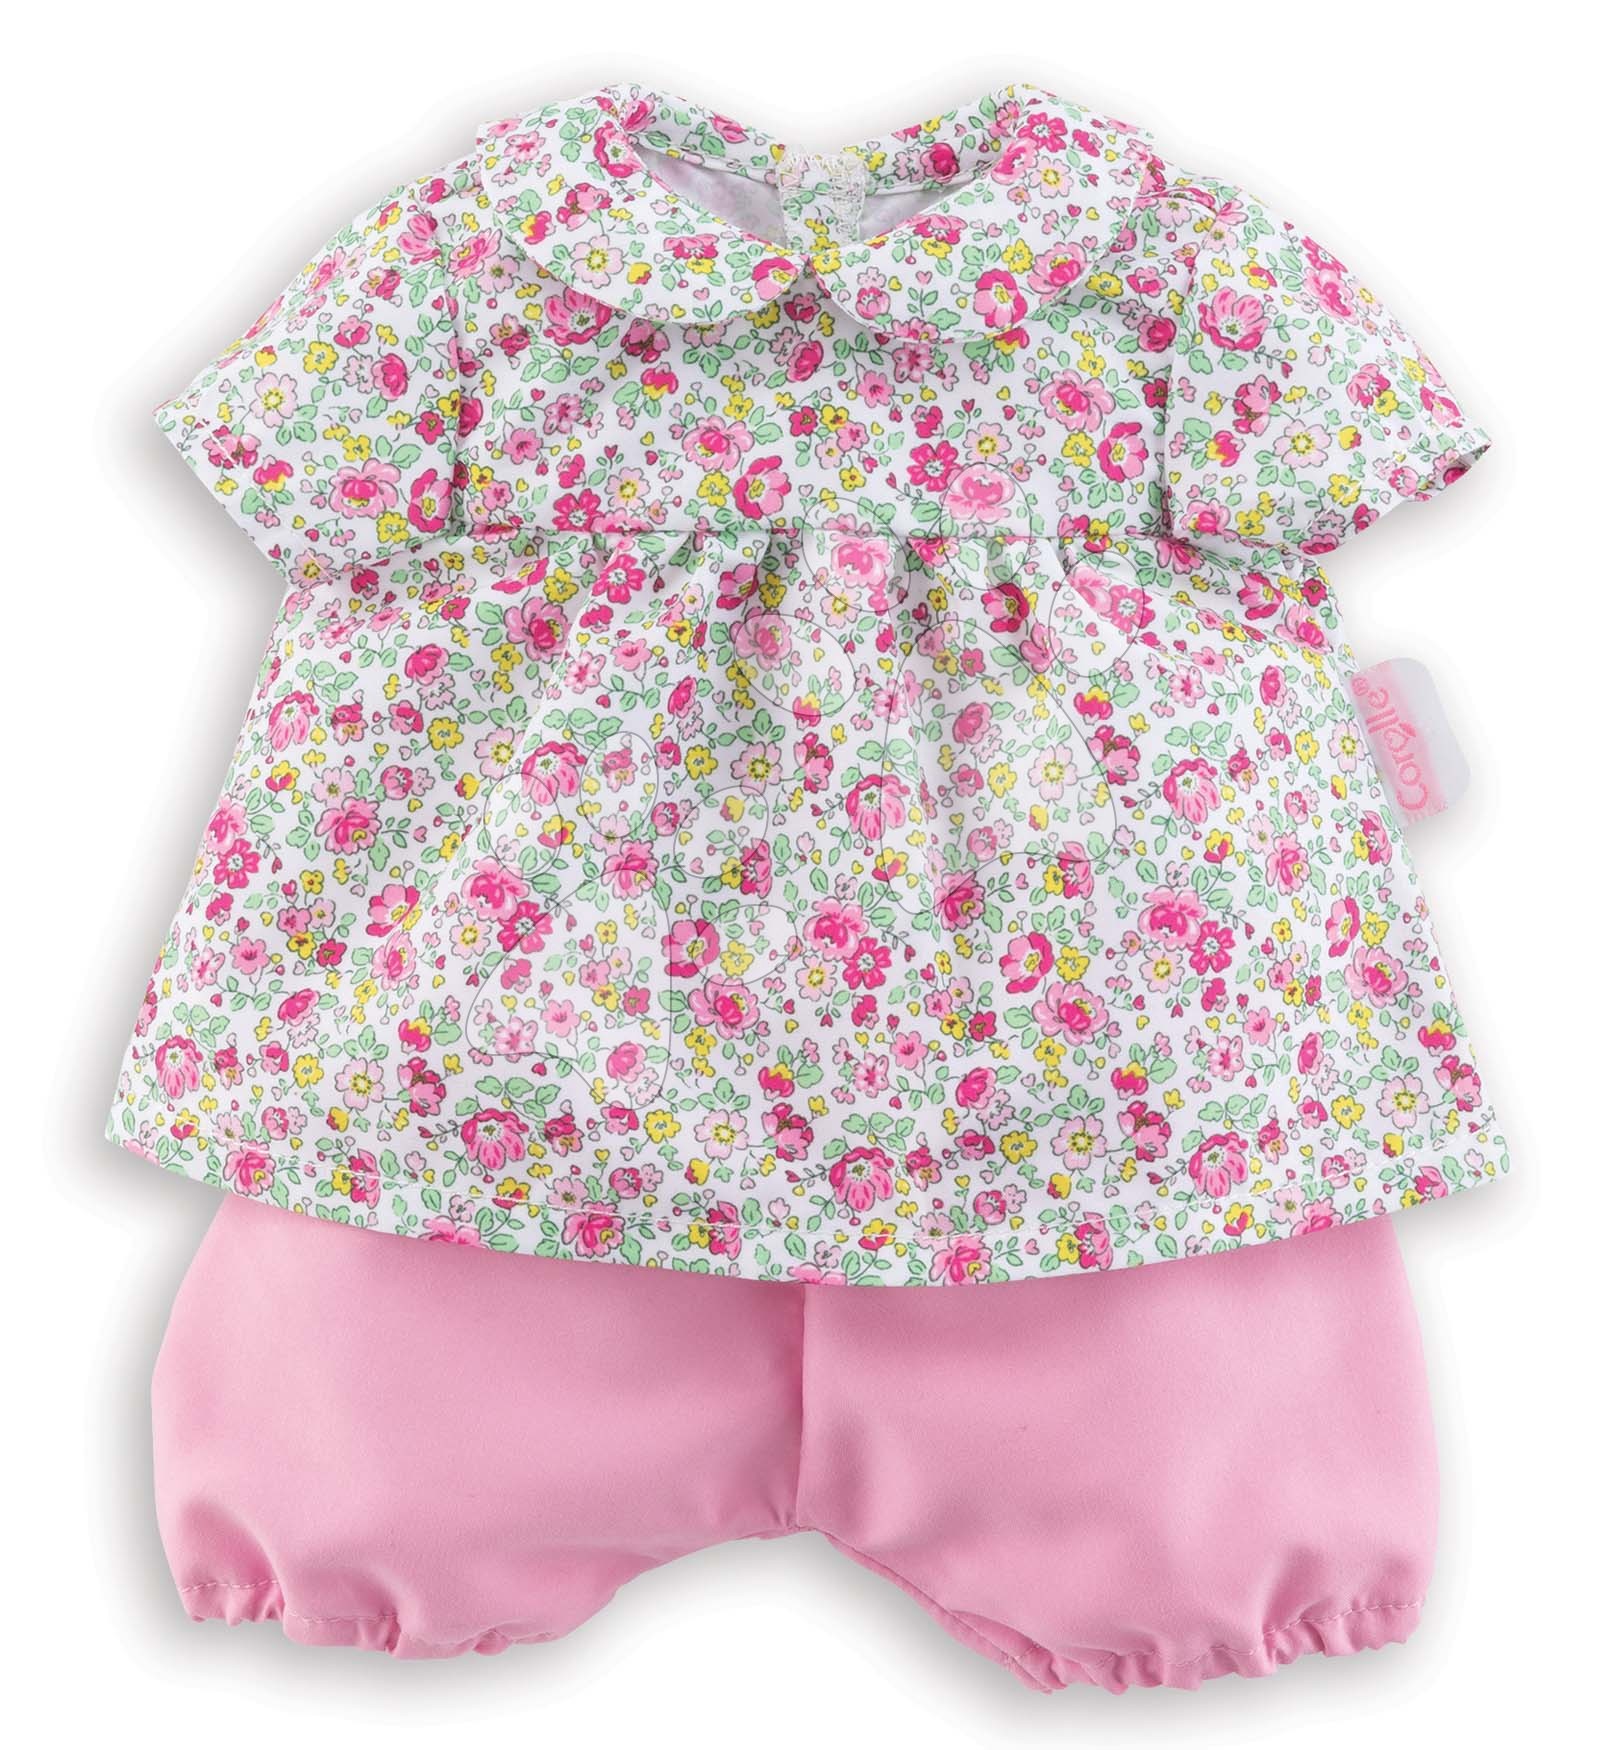 Oblečenie Blouse & Shorts Blossom Garden Mon Grand Poupon Corolle pre 36 cm bábiku od 24 mes